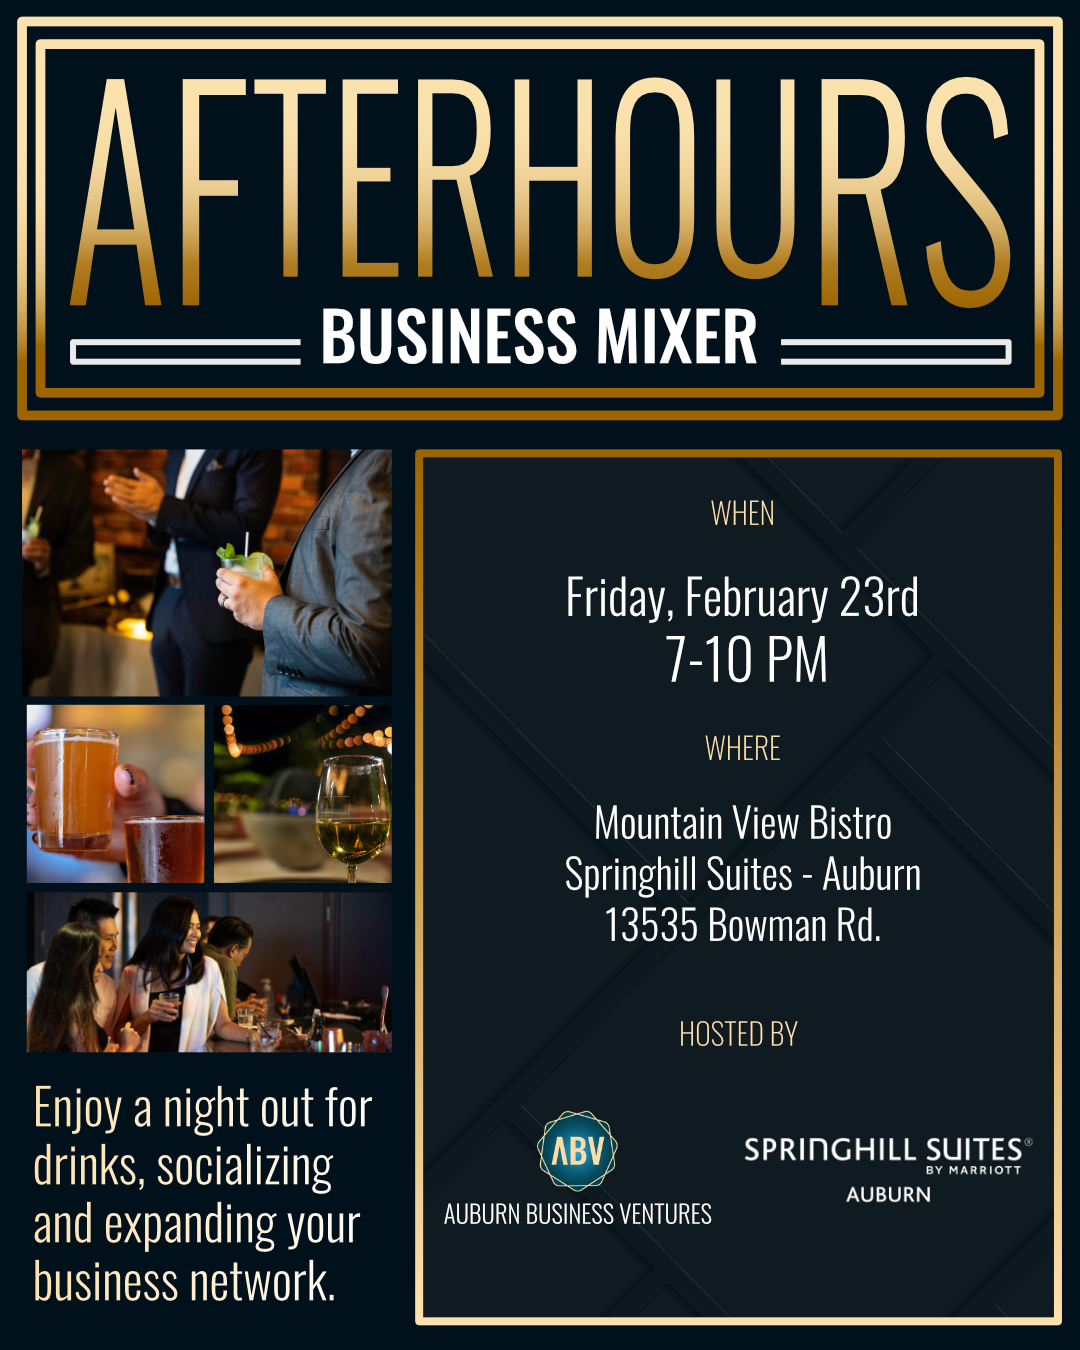 Afterhours Business Mixer in Auburn CA